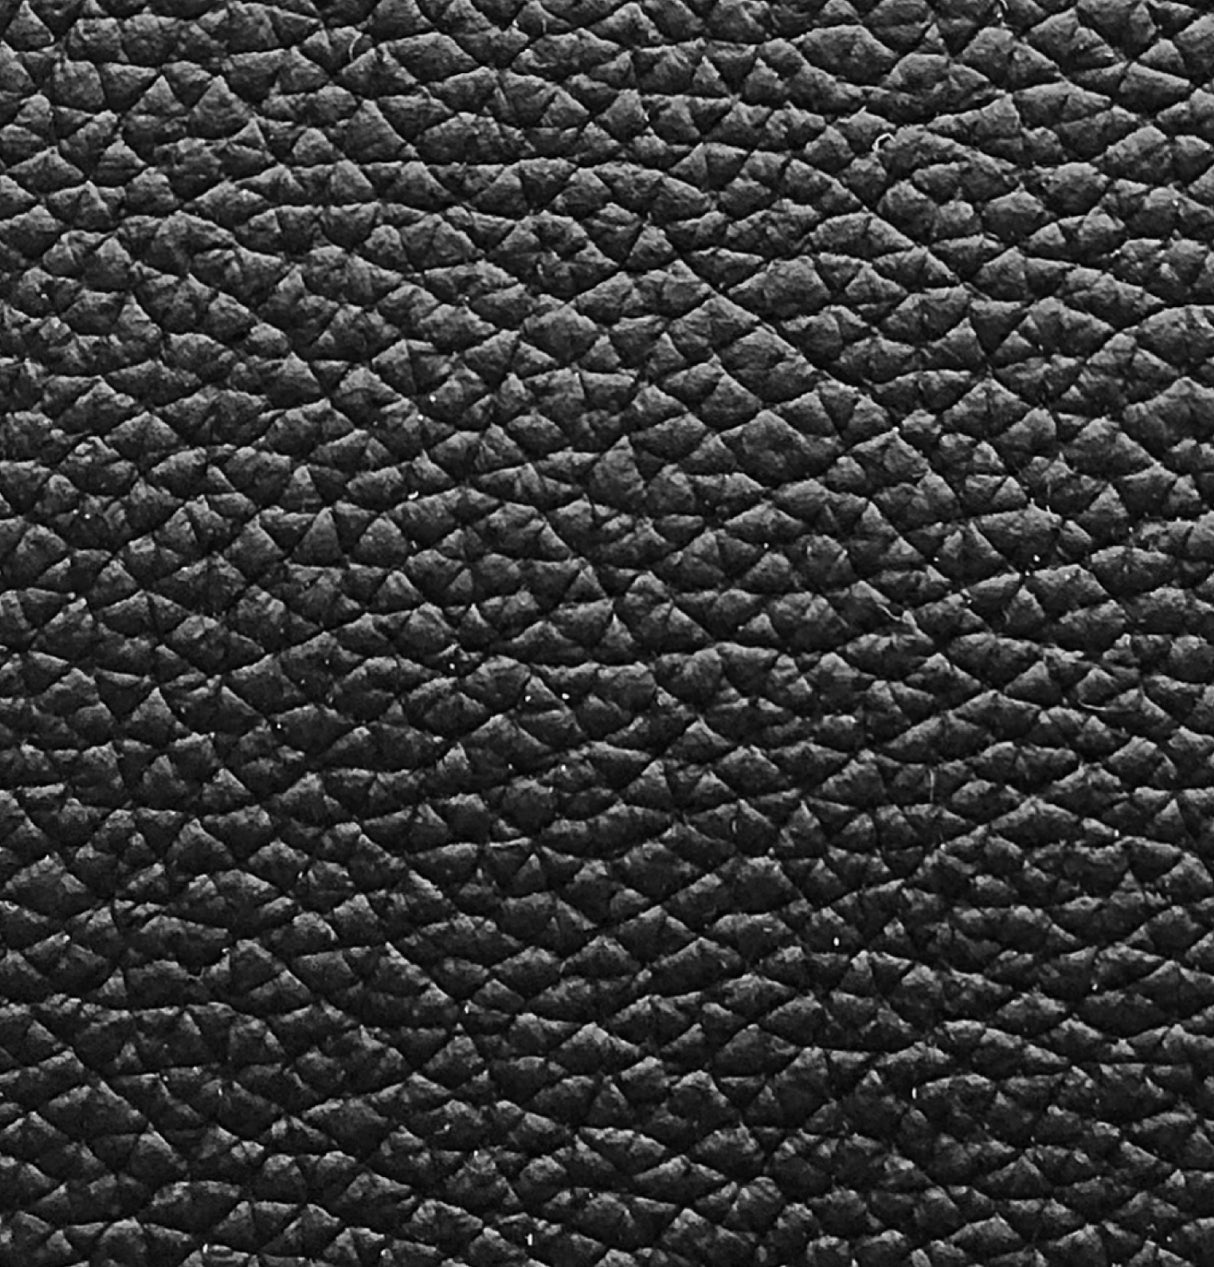 Whole Hide Black Leather - GM (General Motors) Automotive - Meridian Furniture Upholstery